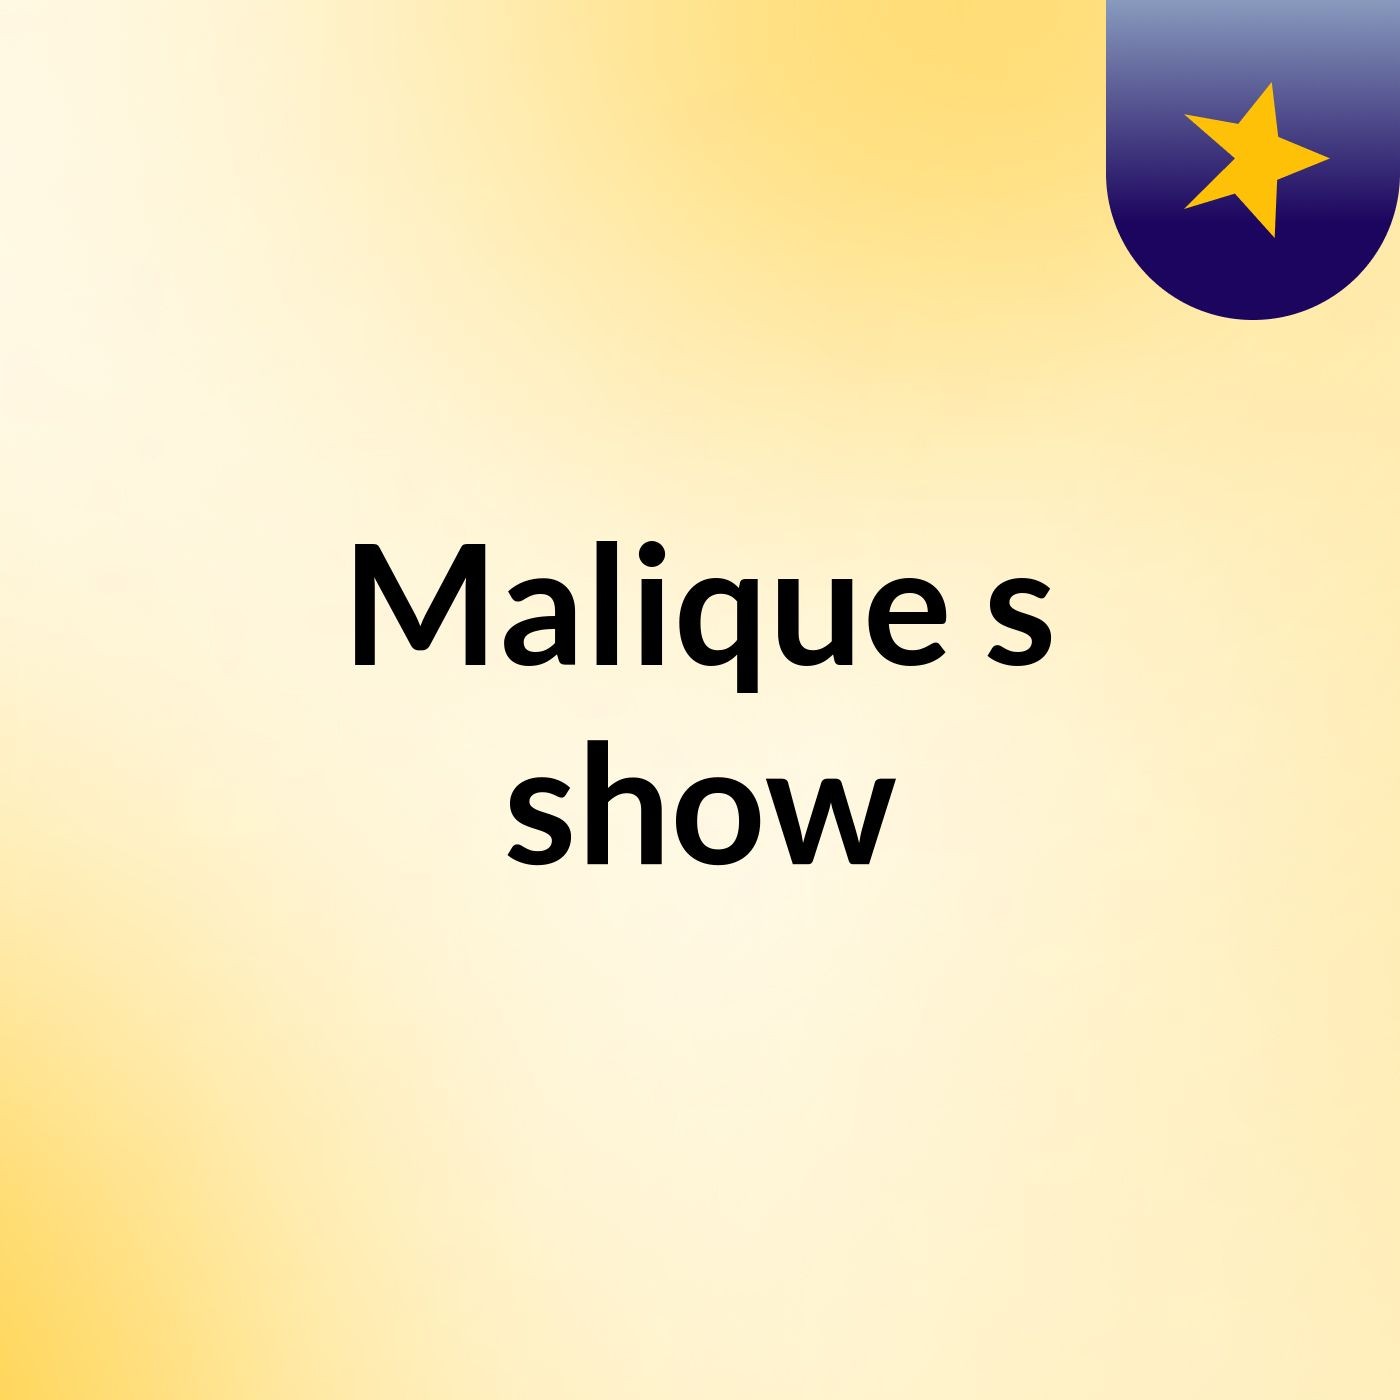 Malique's show